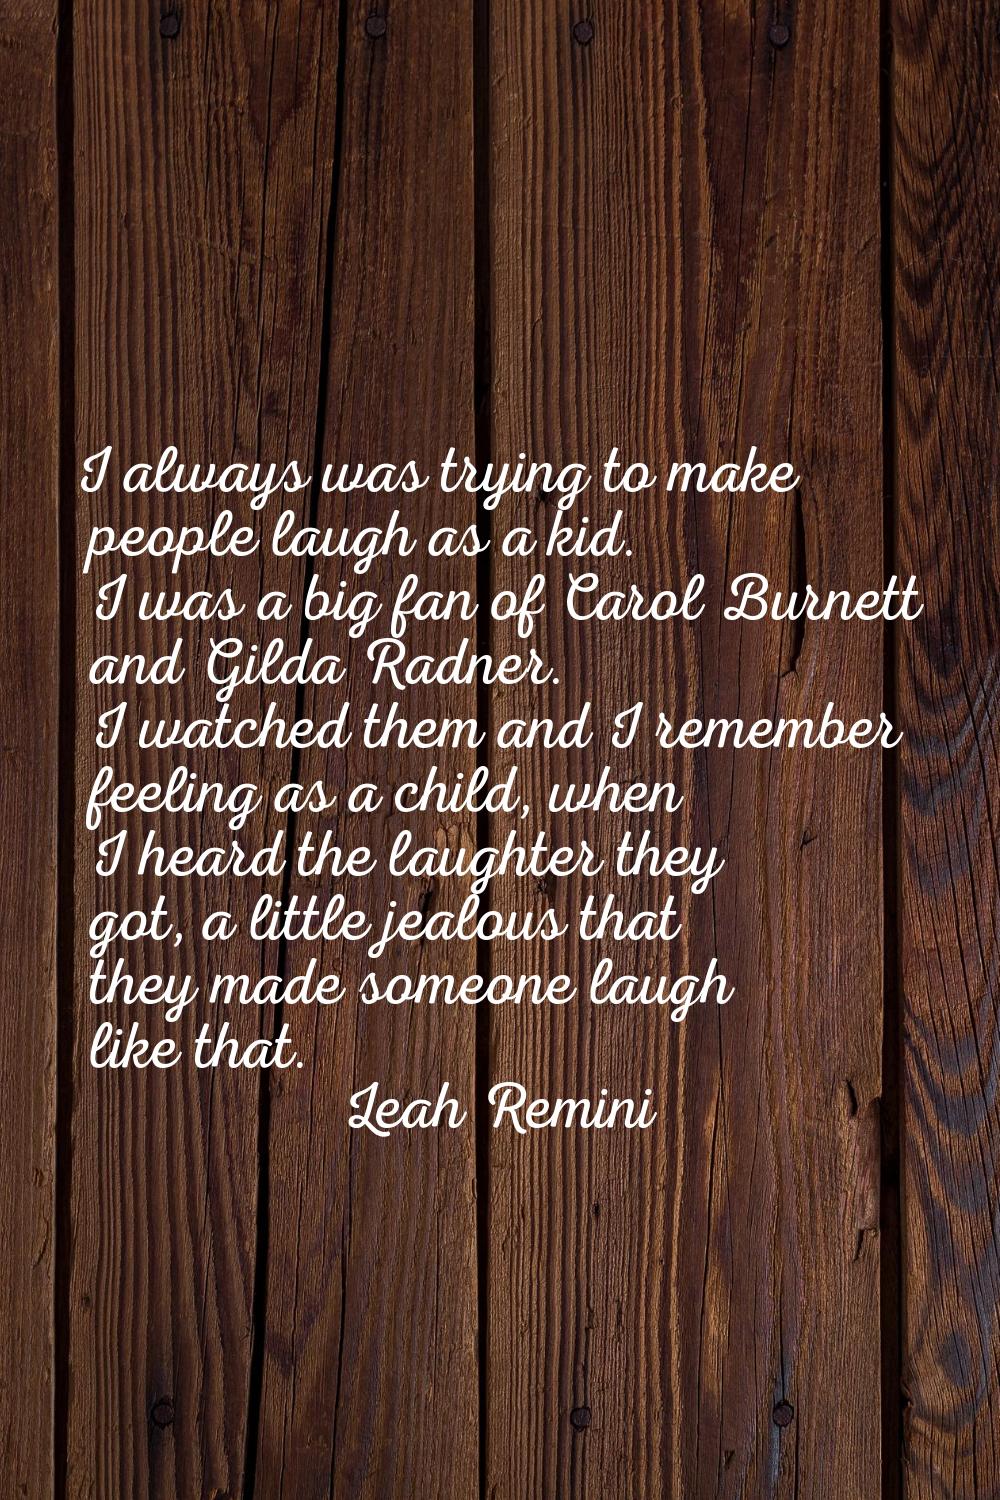 I always was trying to make people laugh as a kid. I was a big fan of Carol Burnett and Gilda Radne